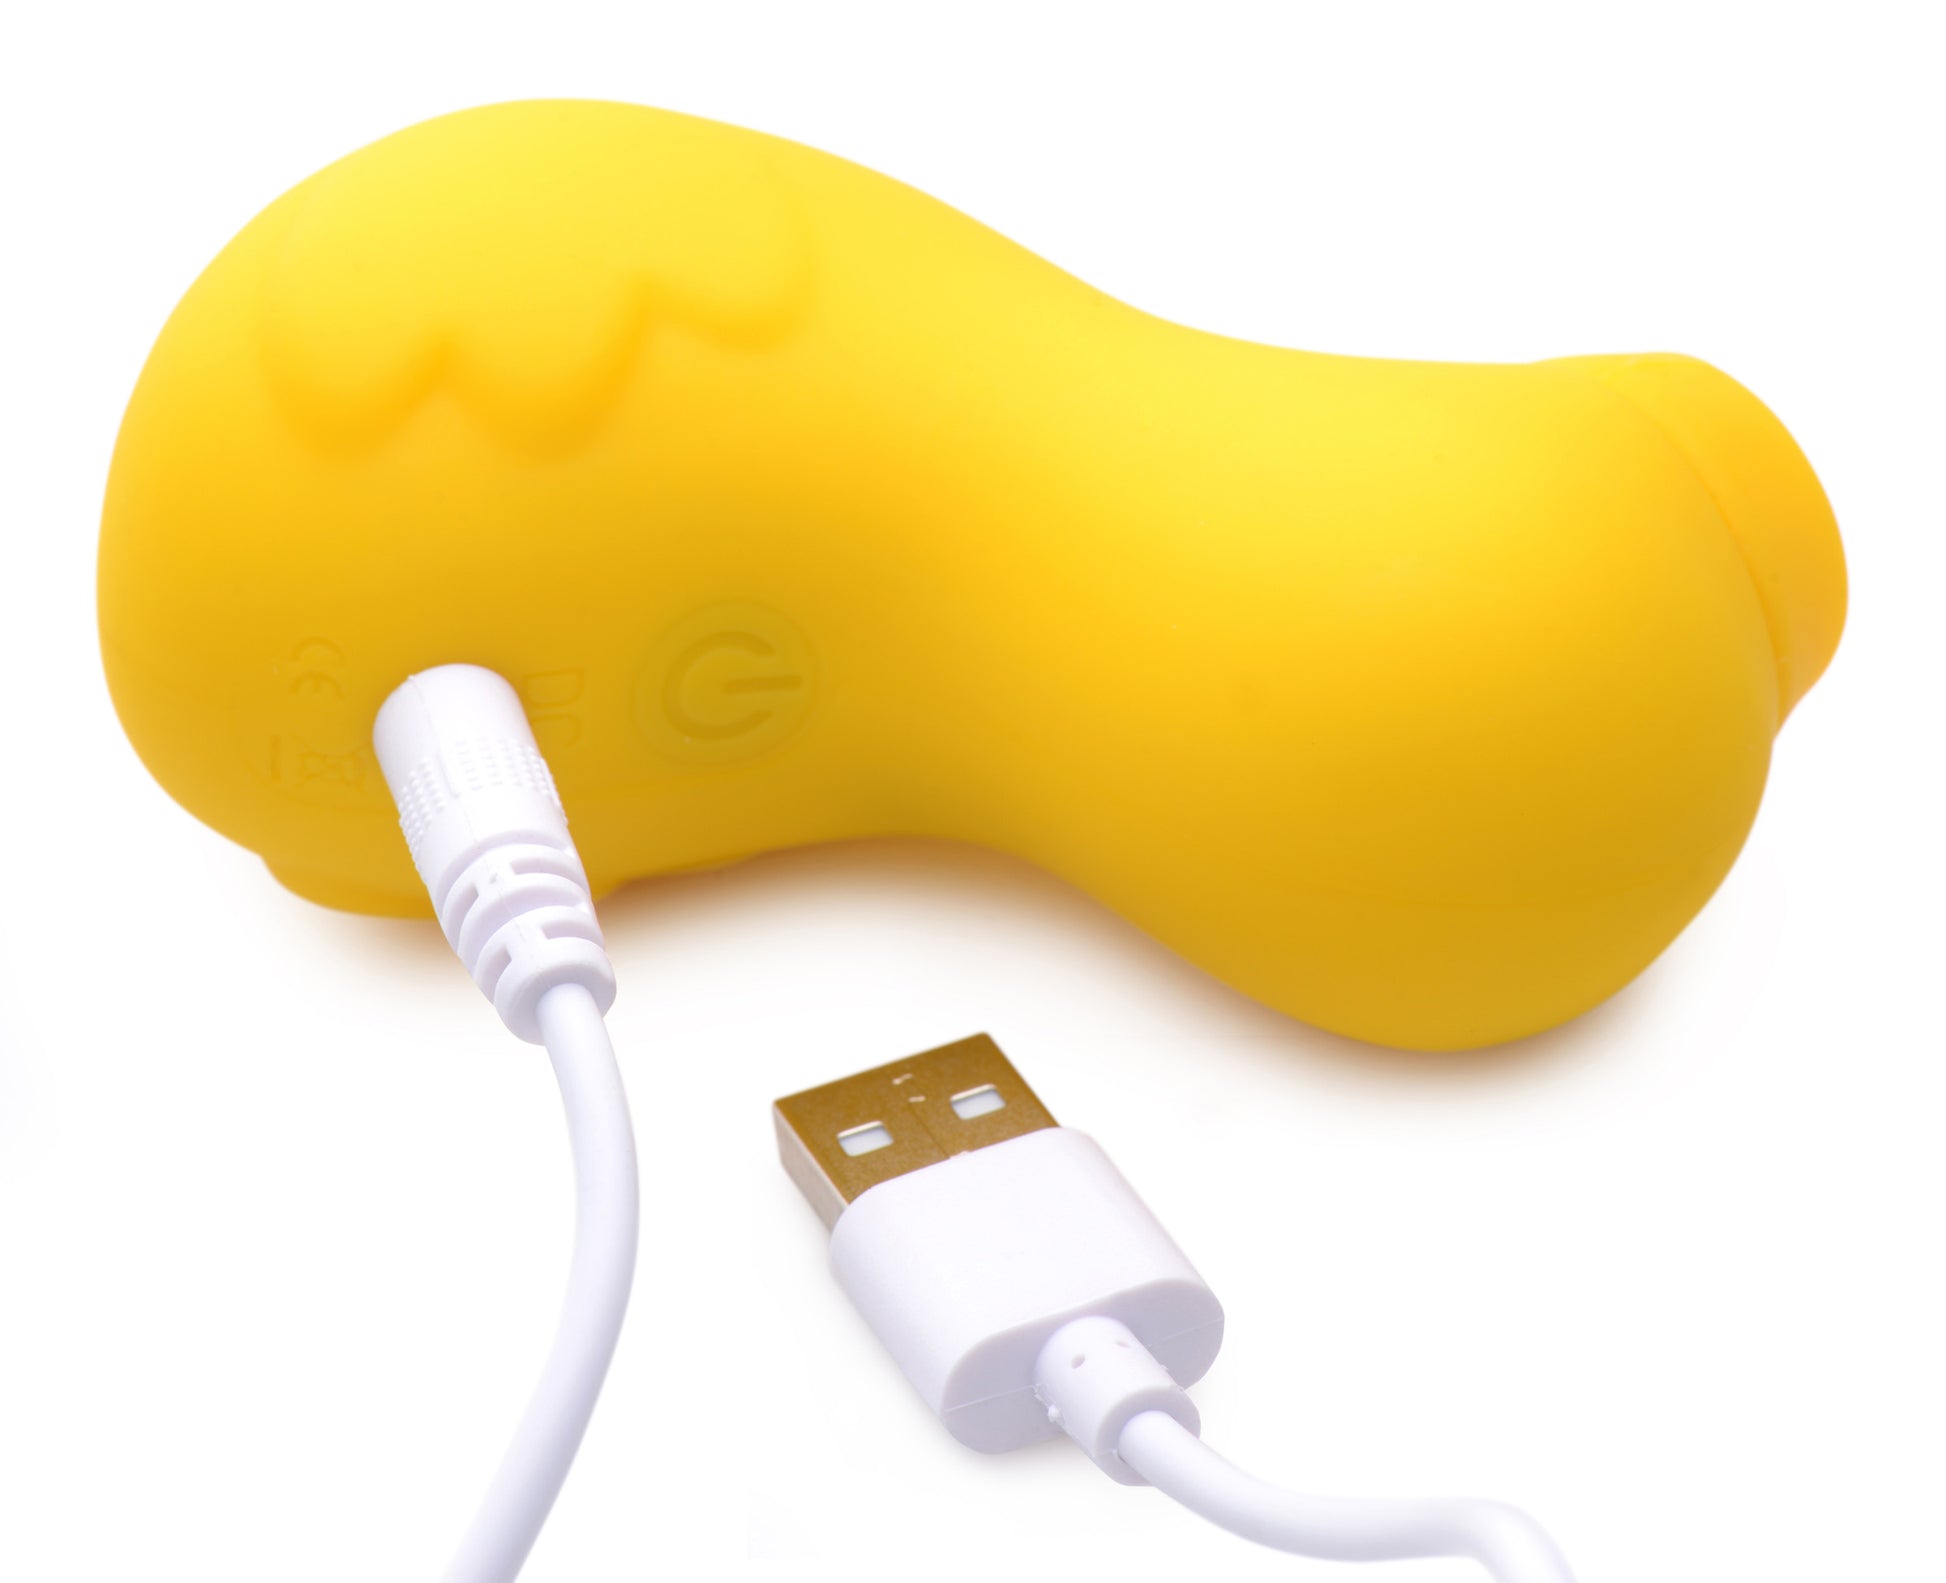 Sucky Ducky Silicone Clitoral Stimulator - Yellow - UABDSM